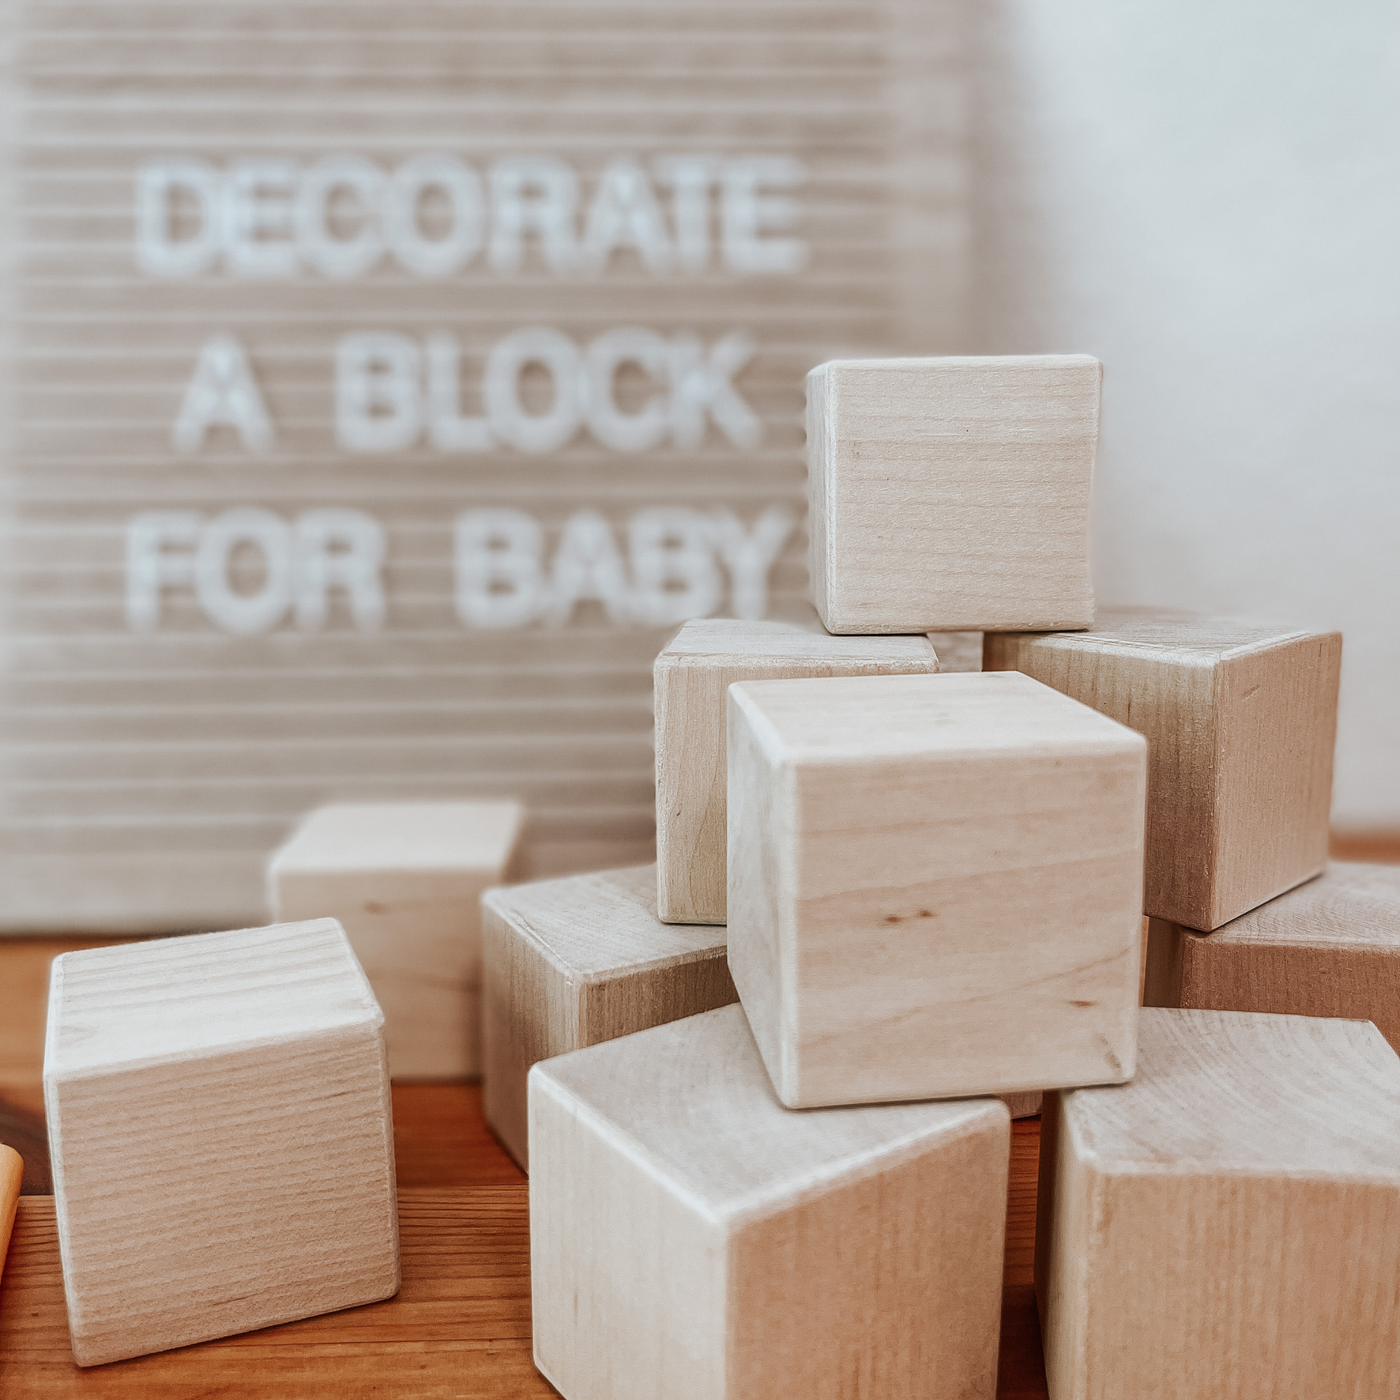 Baby Shower Block Activity